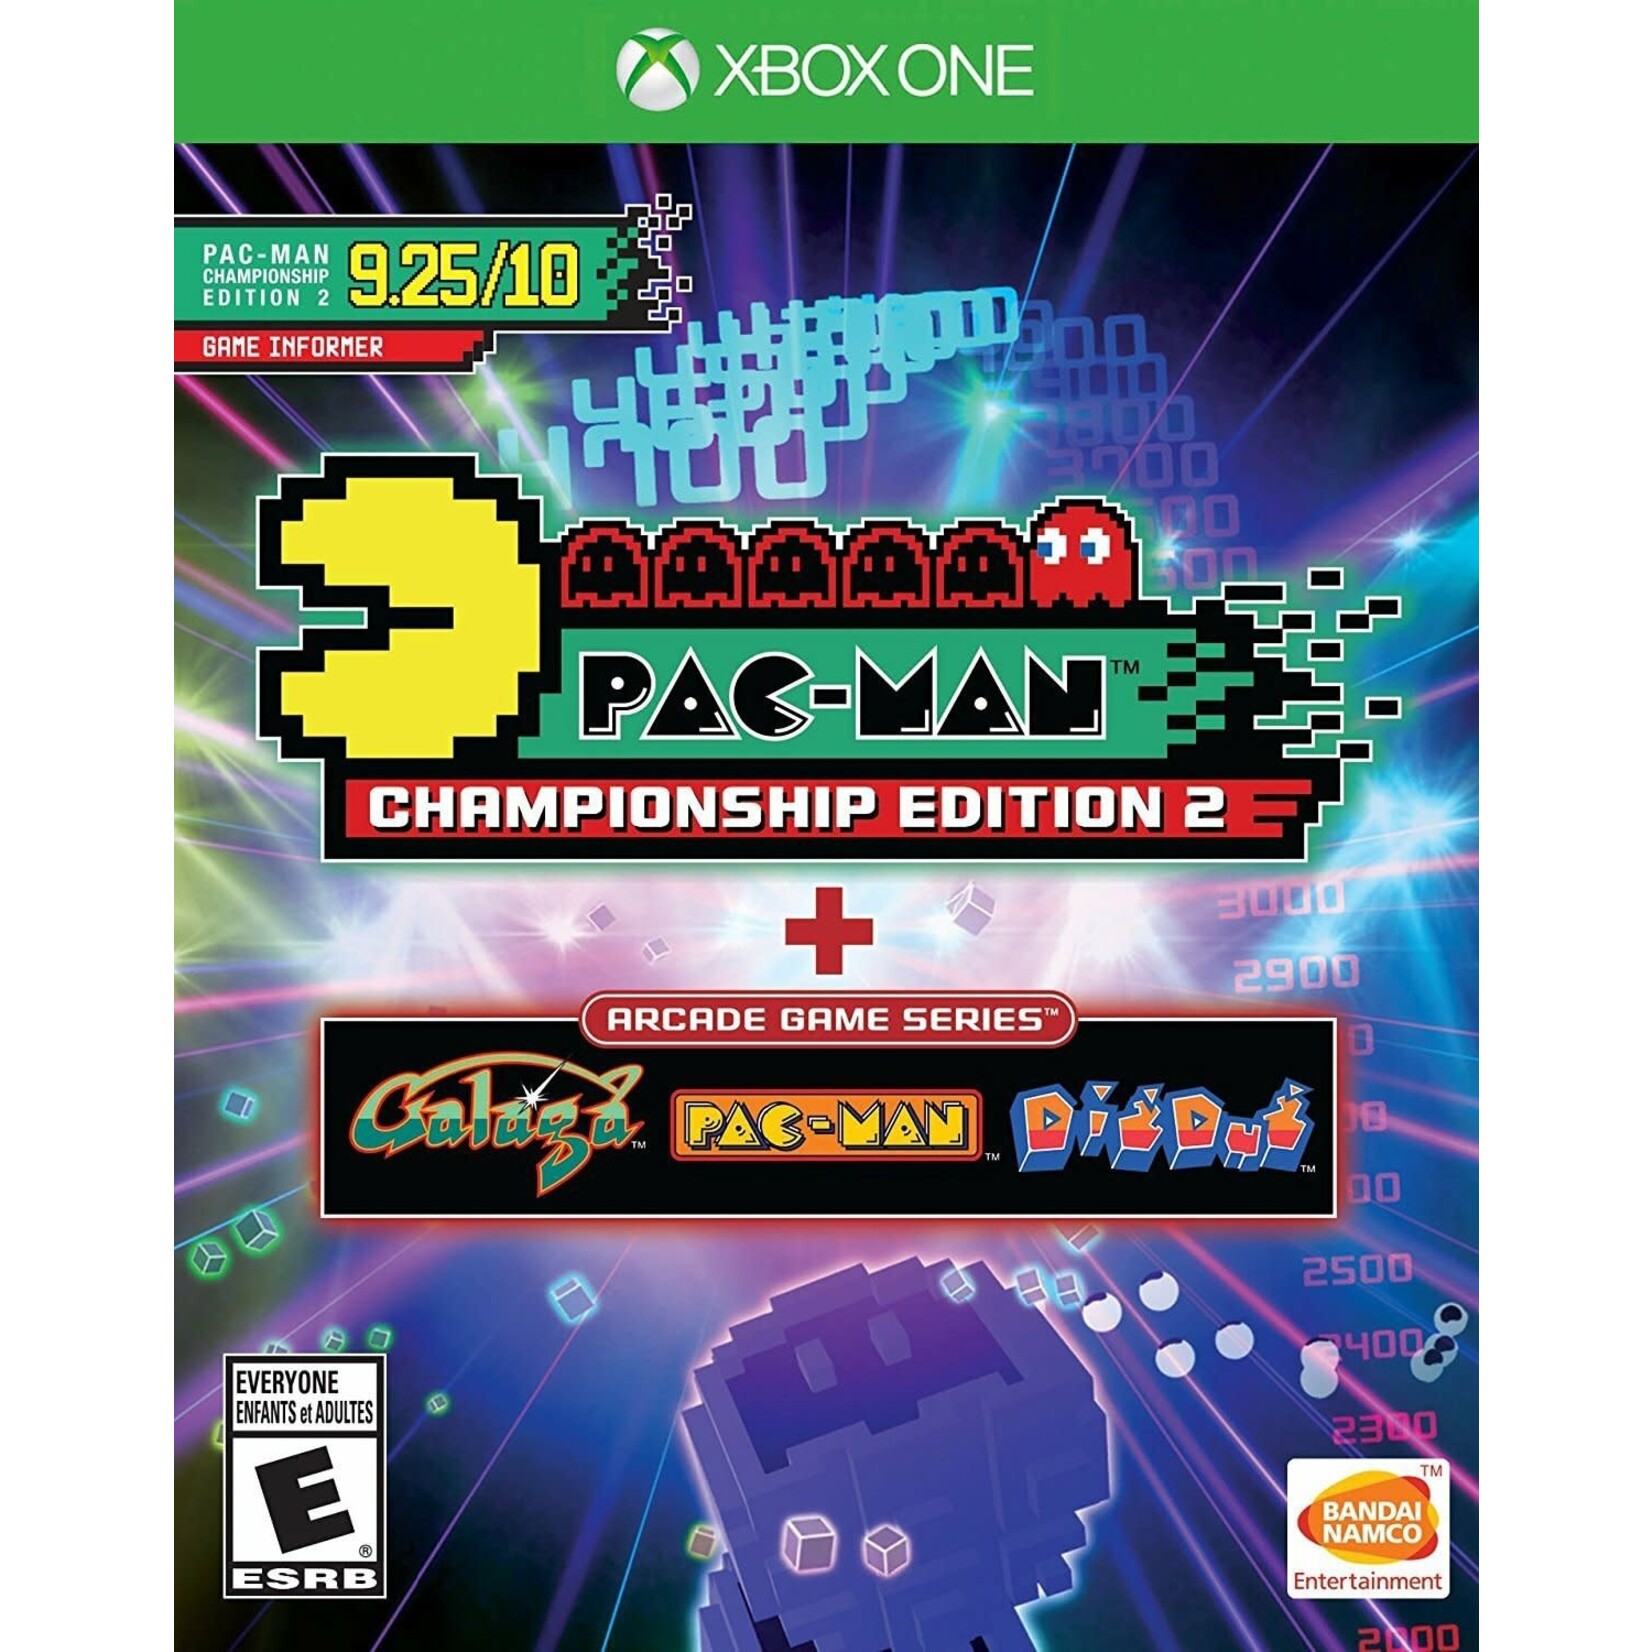 XB1U-Pac-Man Championship Edition 2 + Arcade Game Series